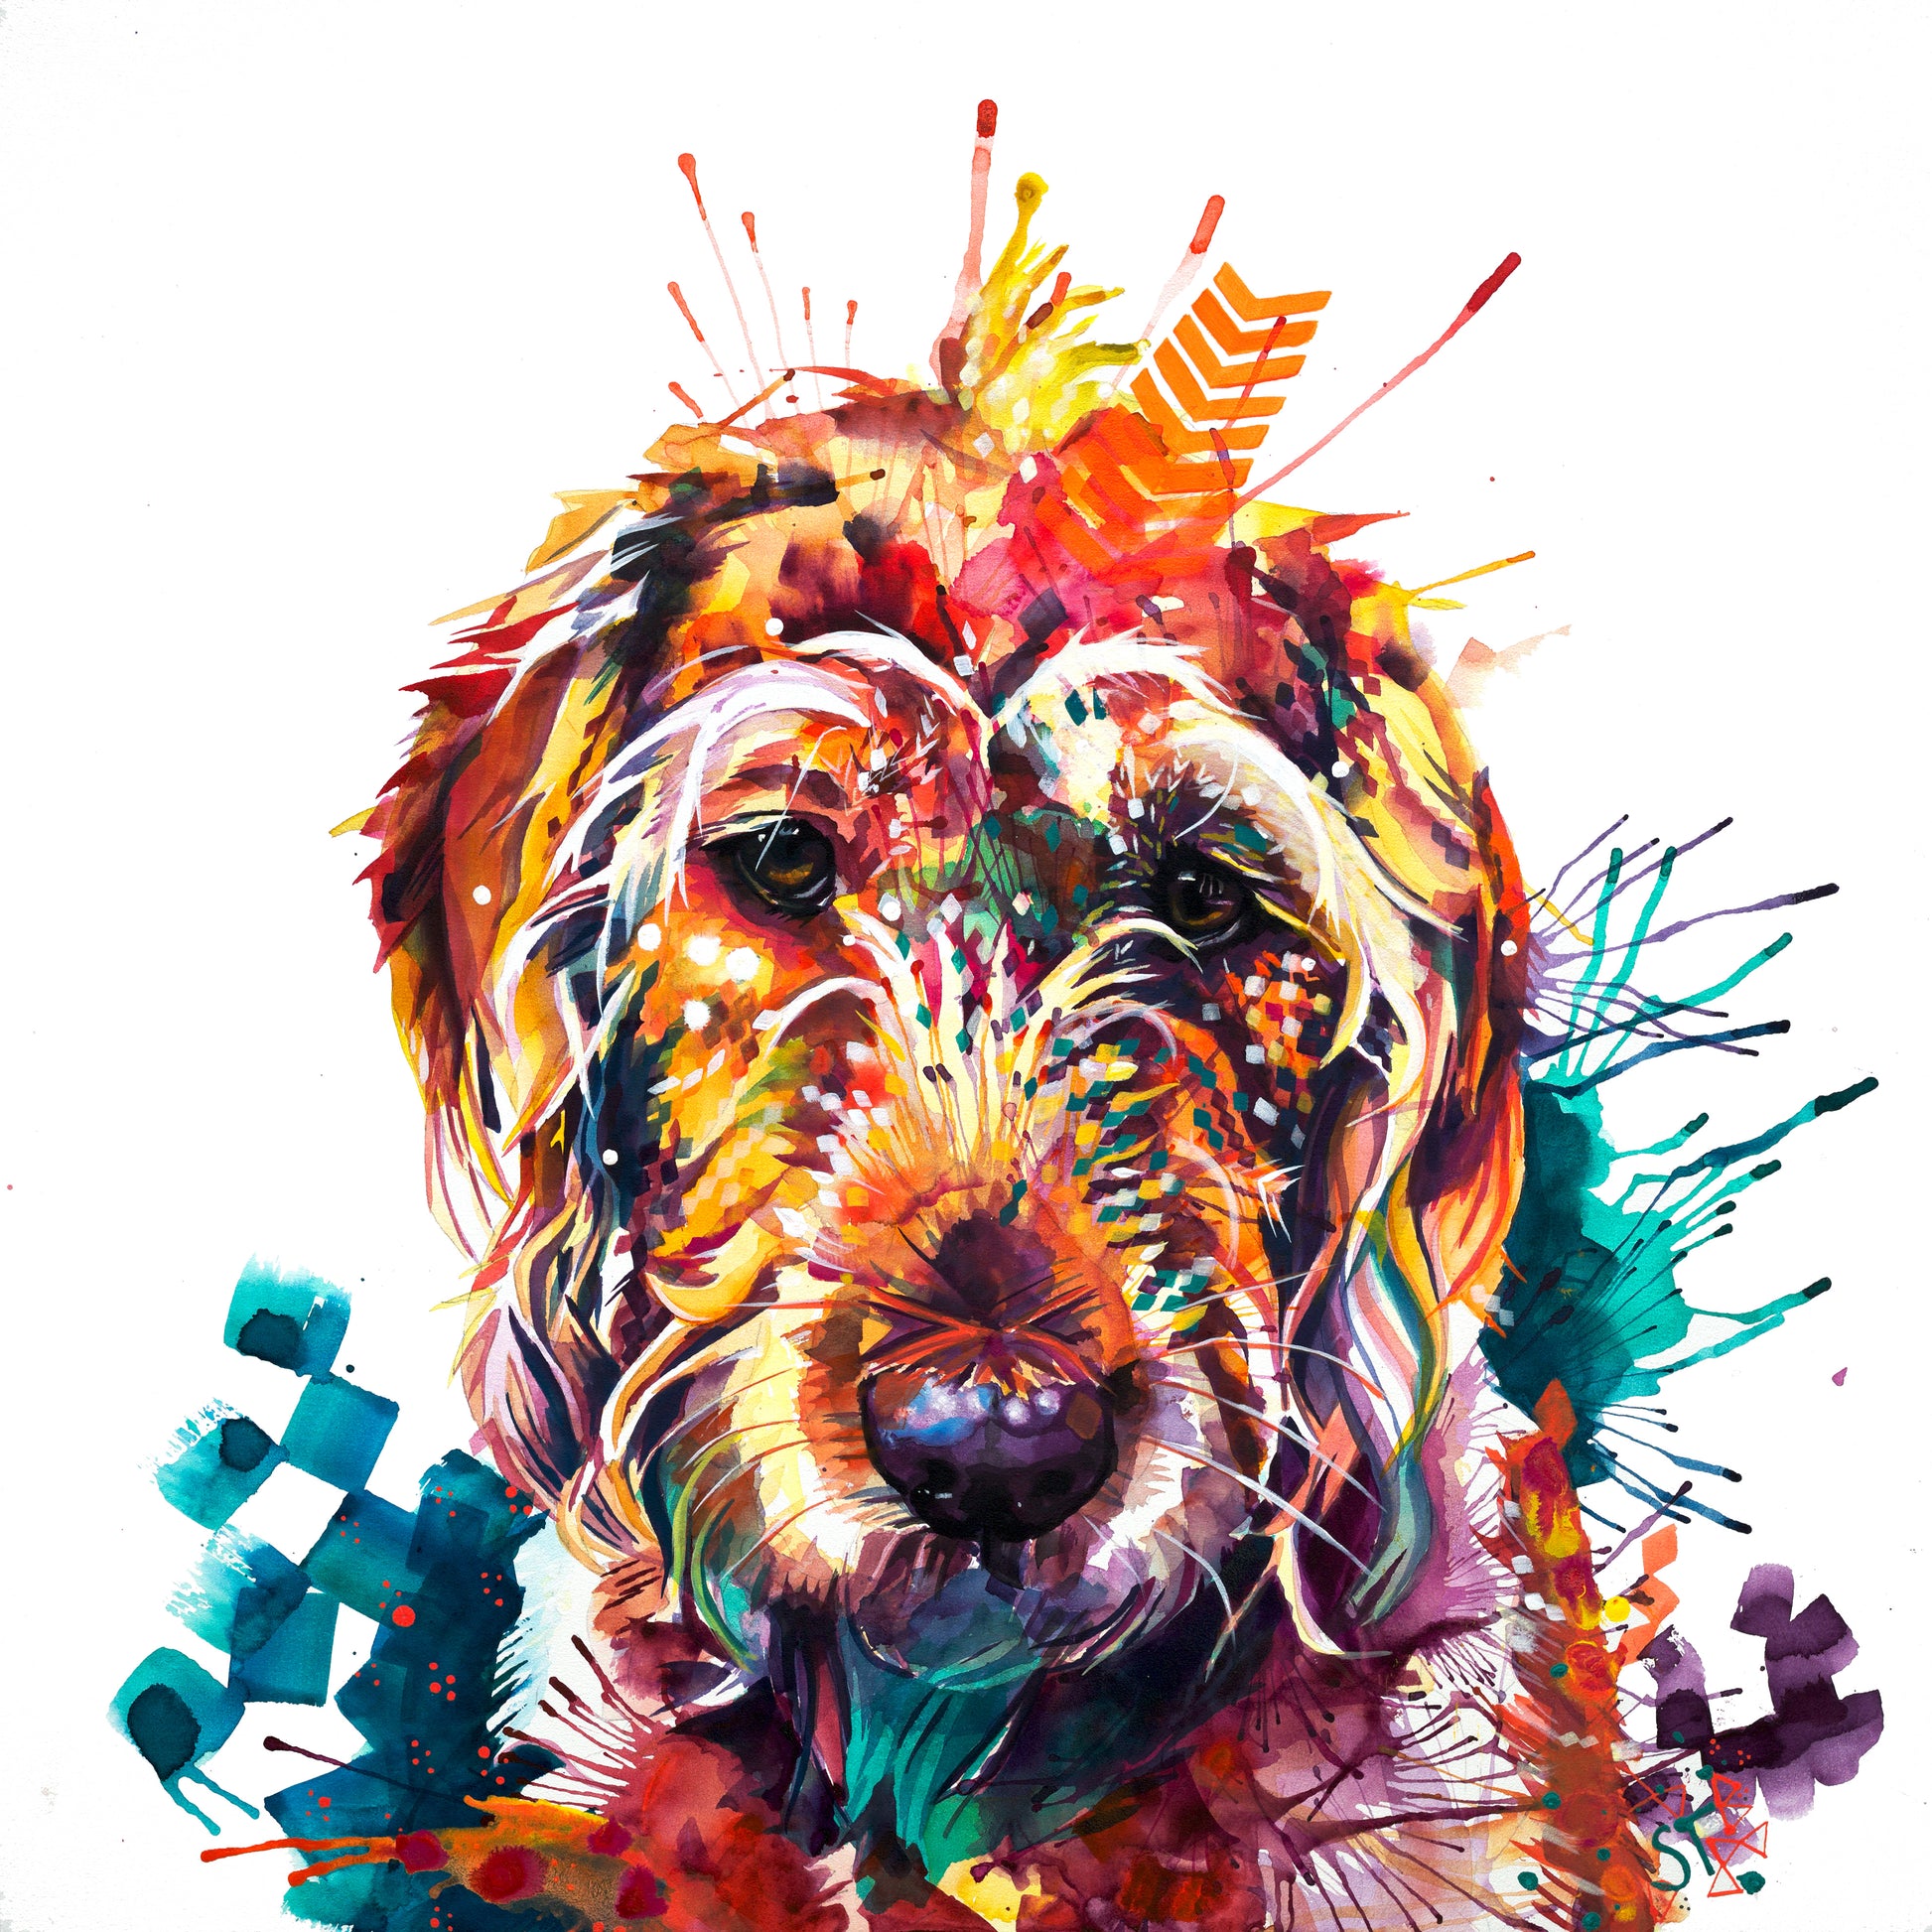 Dog Drawings | Dog Artwork | Dog Painting | Dog Portrait Artists UK | Dog Canvas Prints | Wall Art | Wall Prints